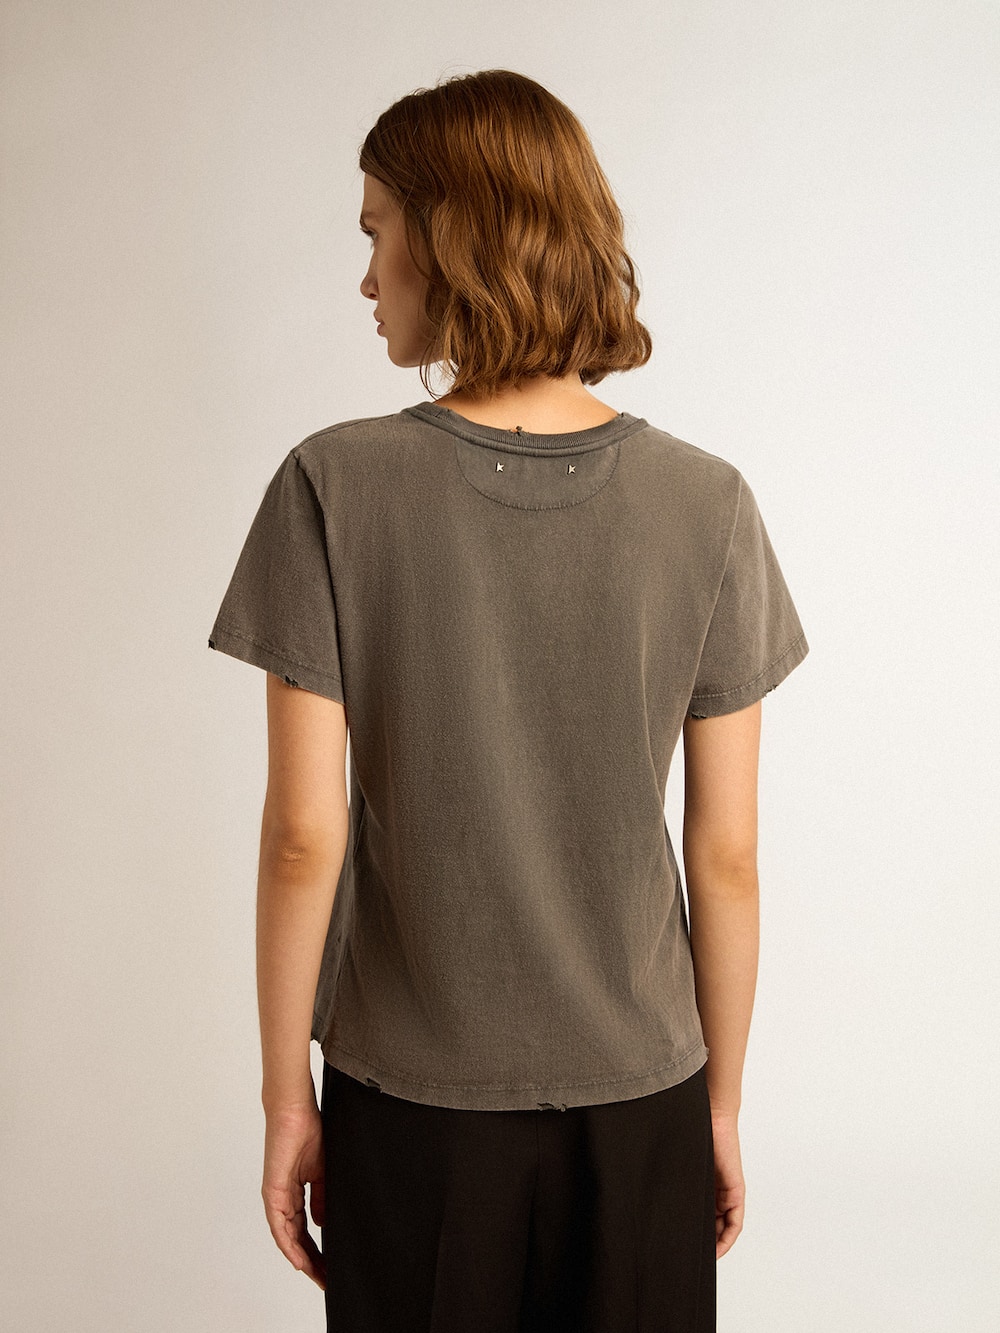 Golden Goose - Camiseta de caimento slim cinza antracite com tratamento desgastado in 